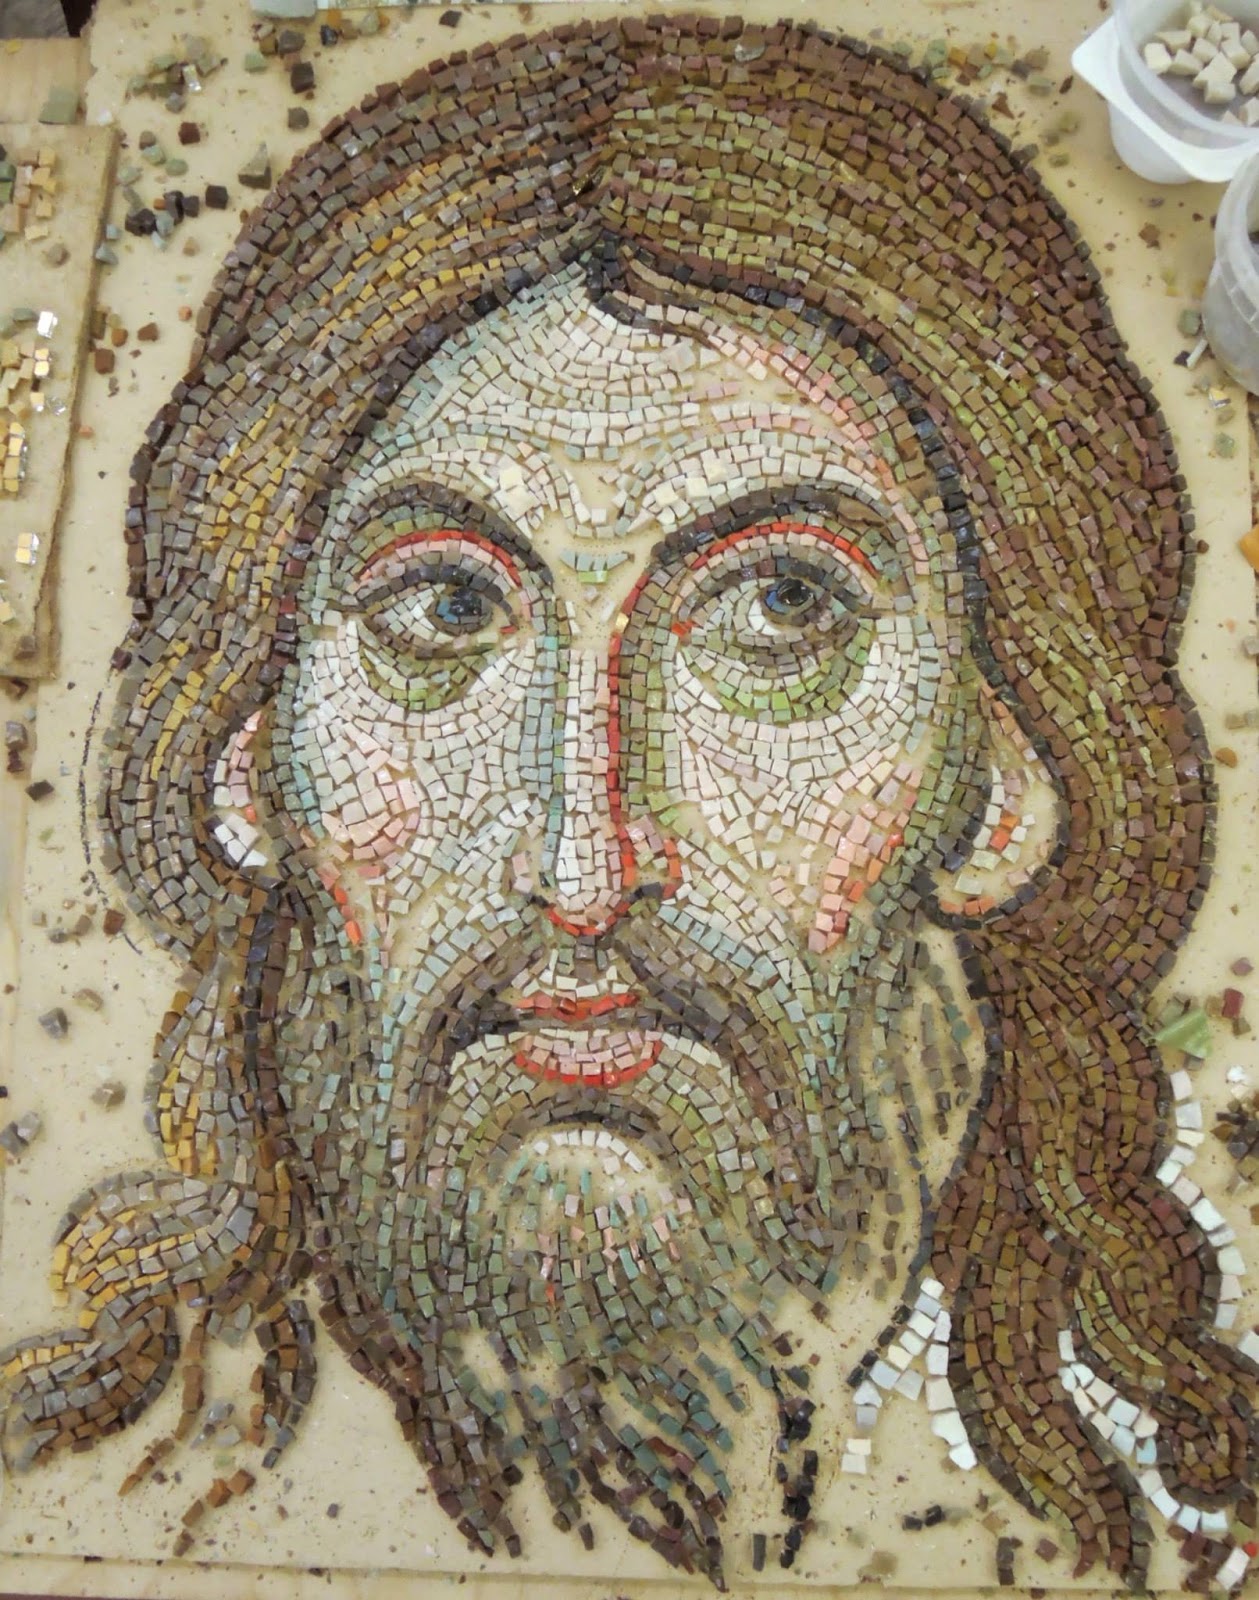 Who is jesus christ essay